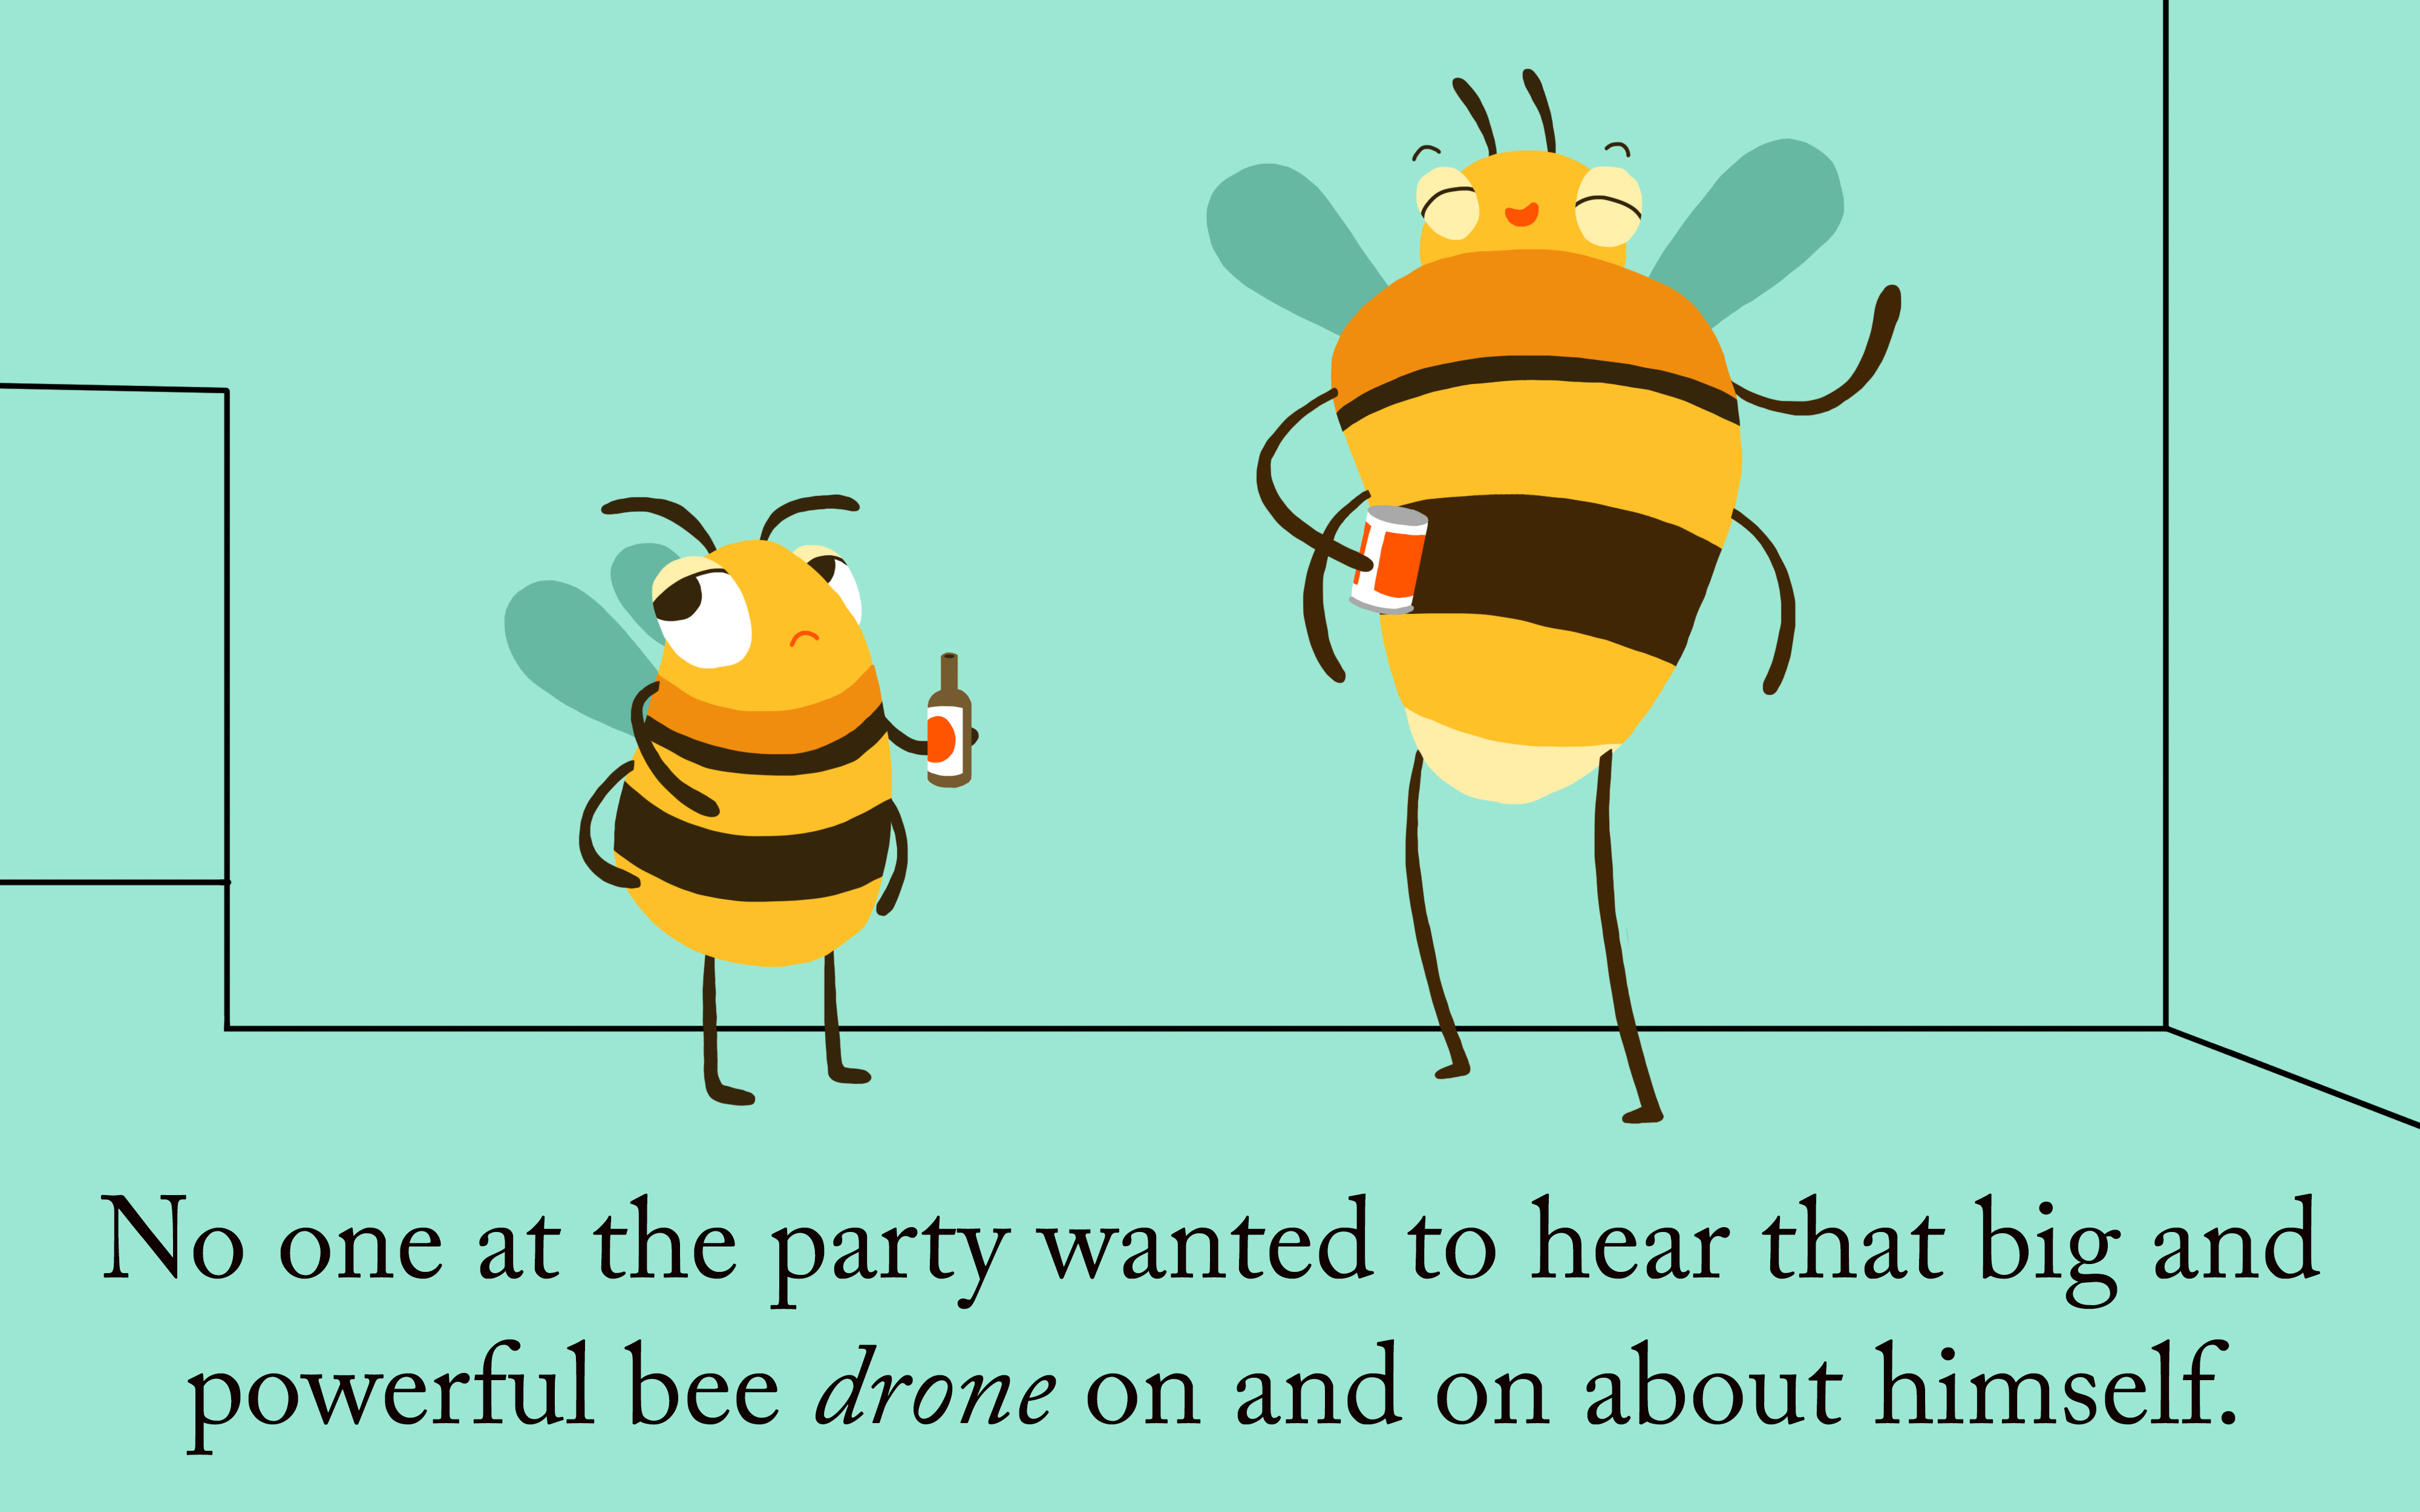 bee puns birthday